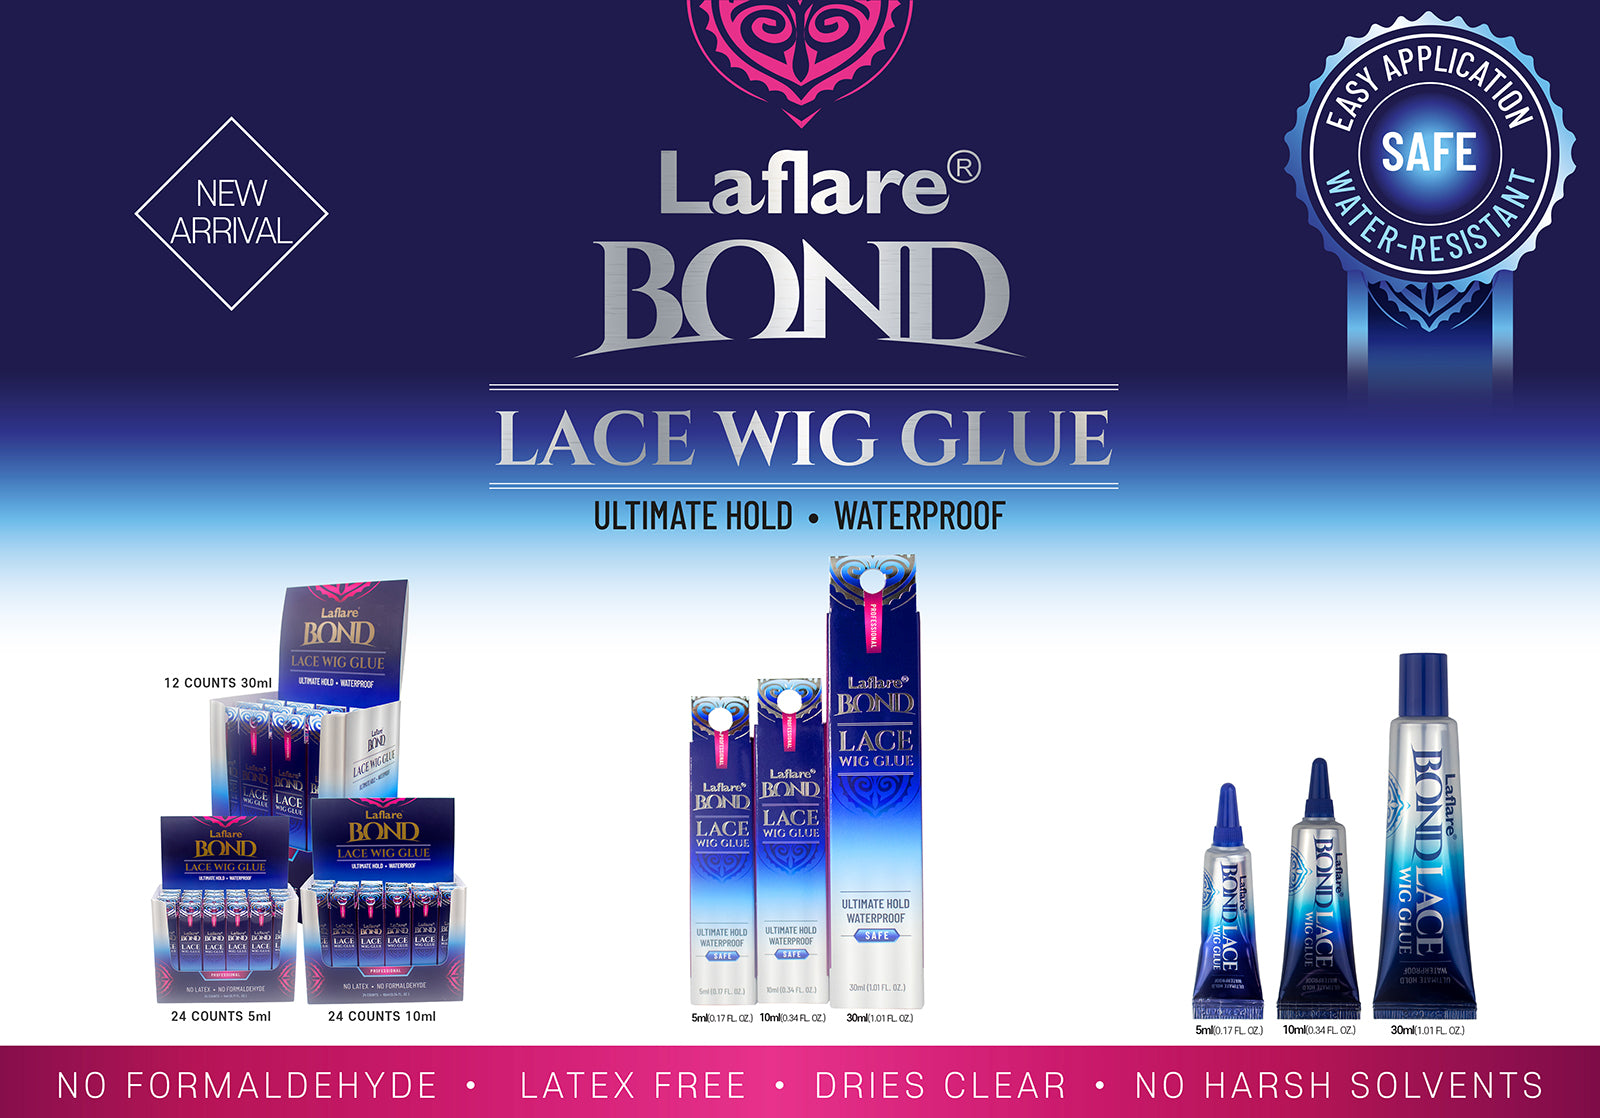 Laflare_bond Lace wig glue 30ml, 10ml, 5ml